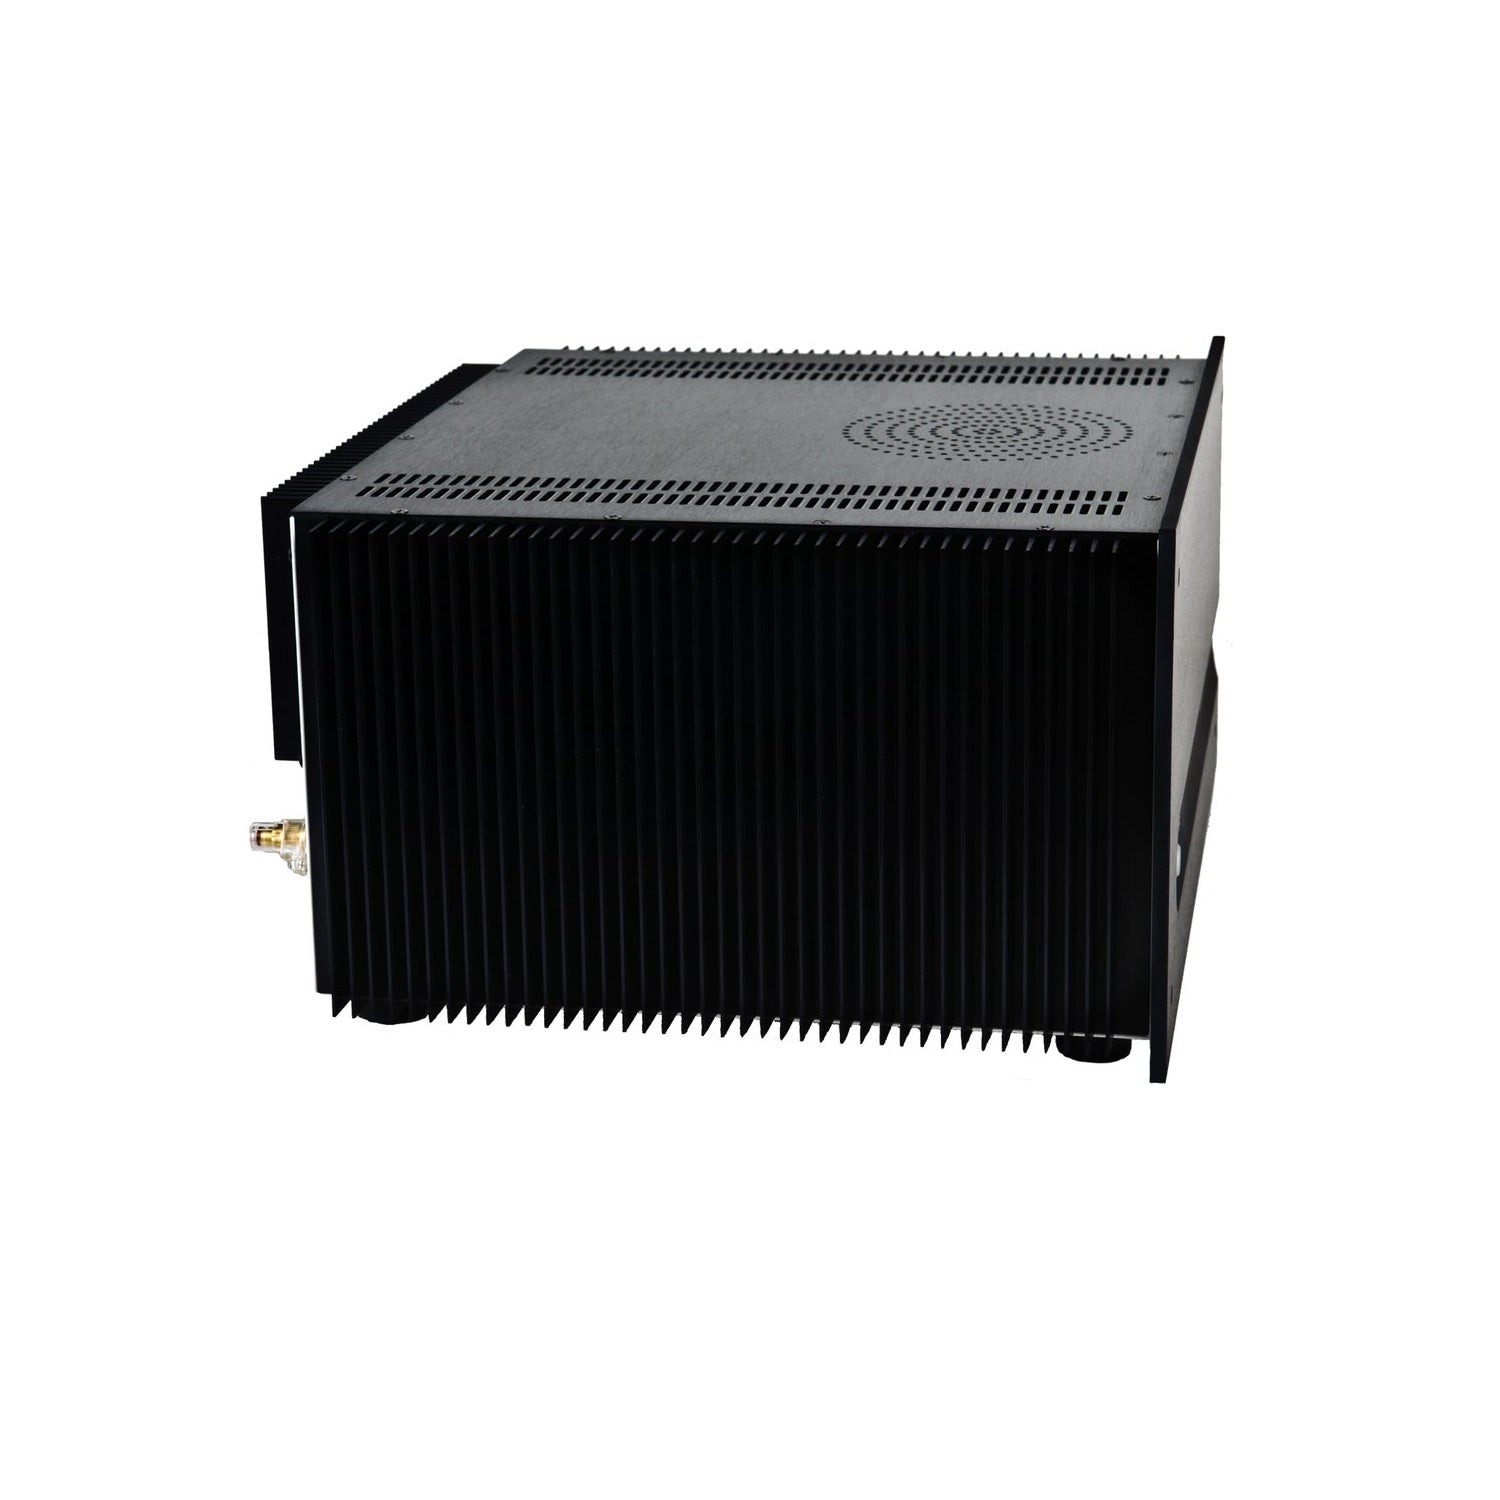 Acurus A2007 7-channel, 200Wx7 Smart Power Amplifier